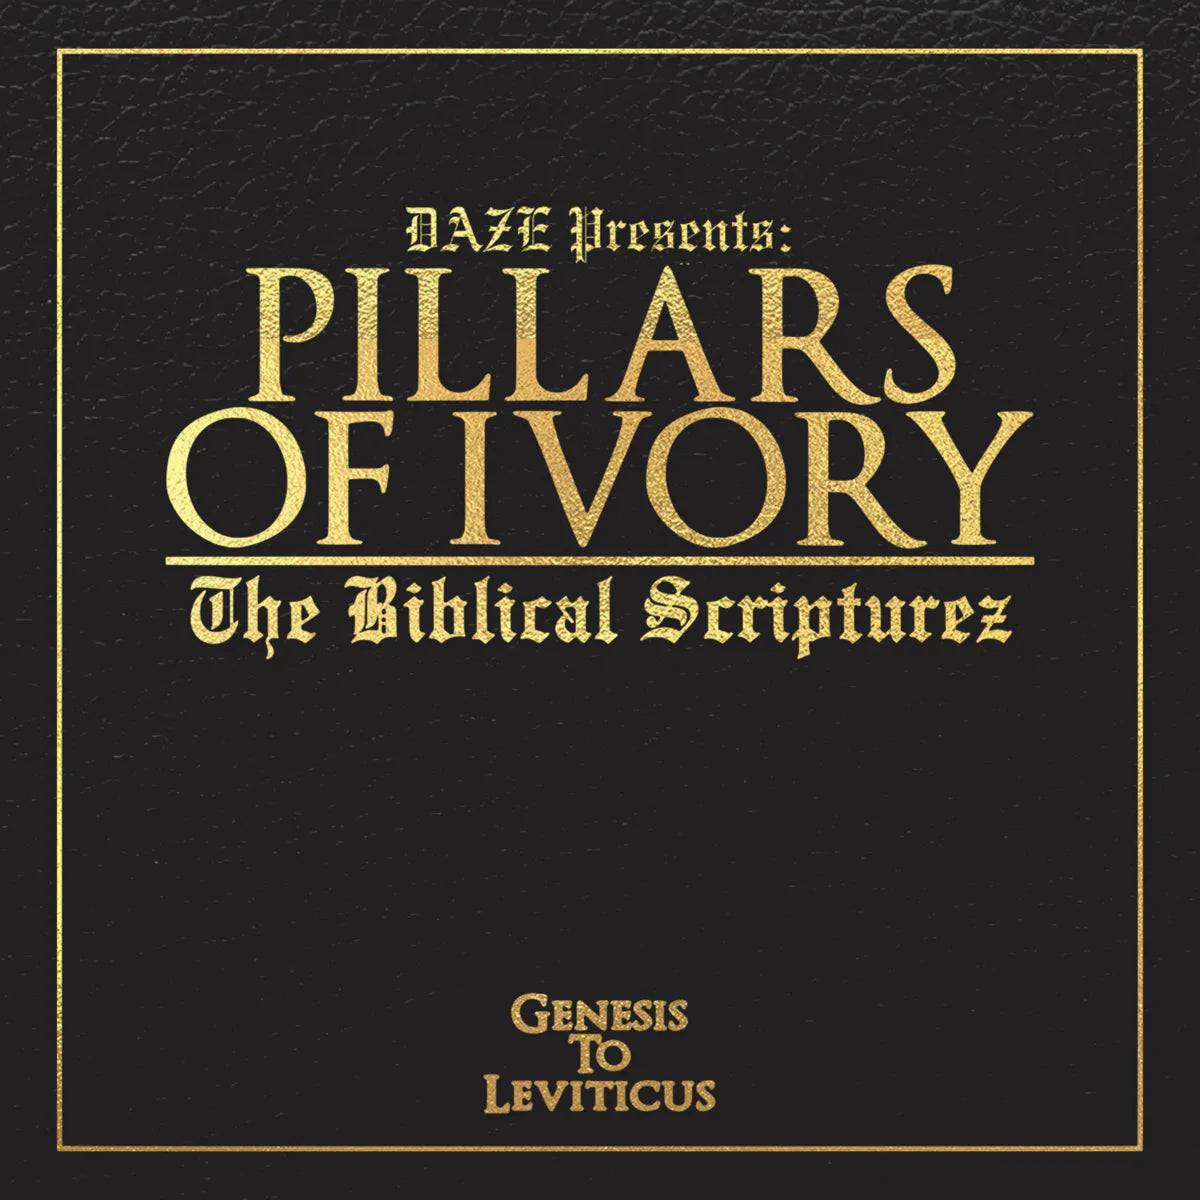 Pillars of Ivory "The Biblical Scripturez" CD